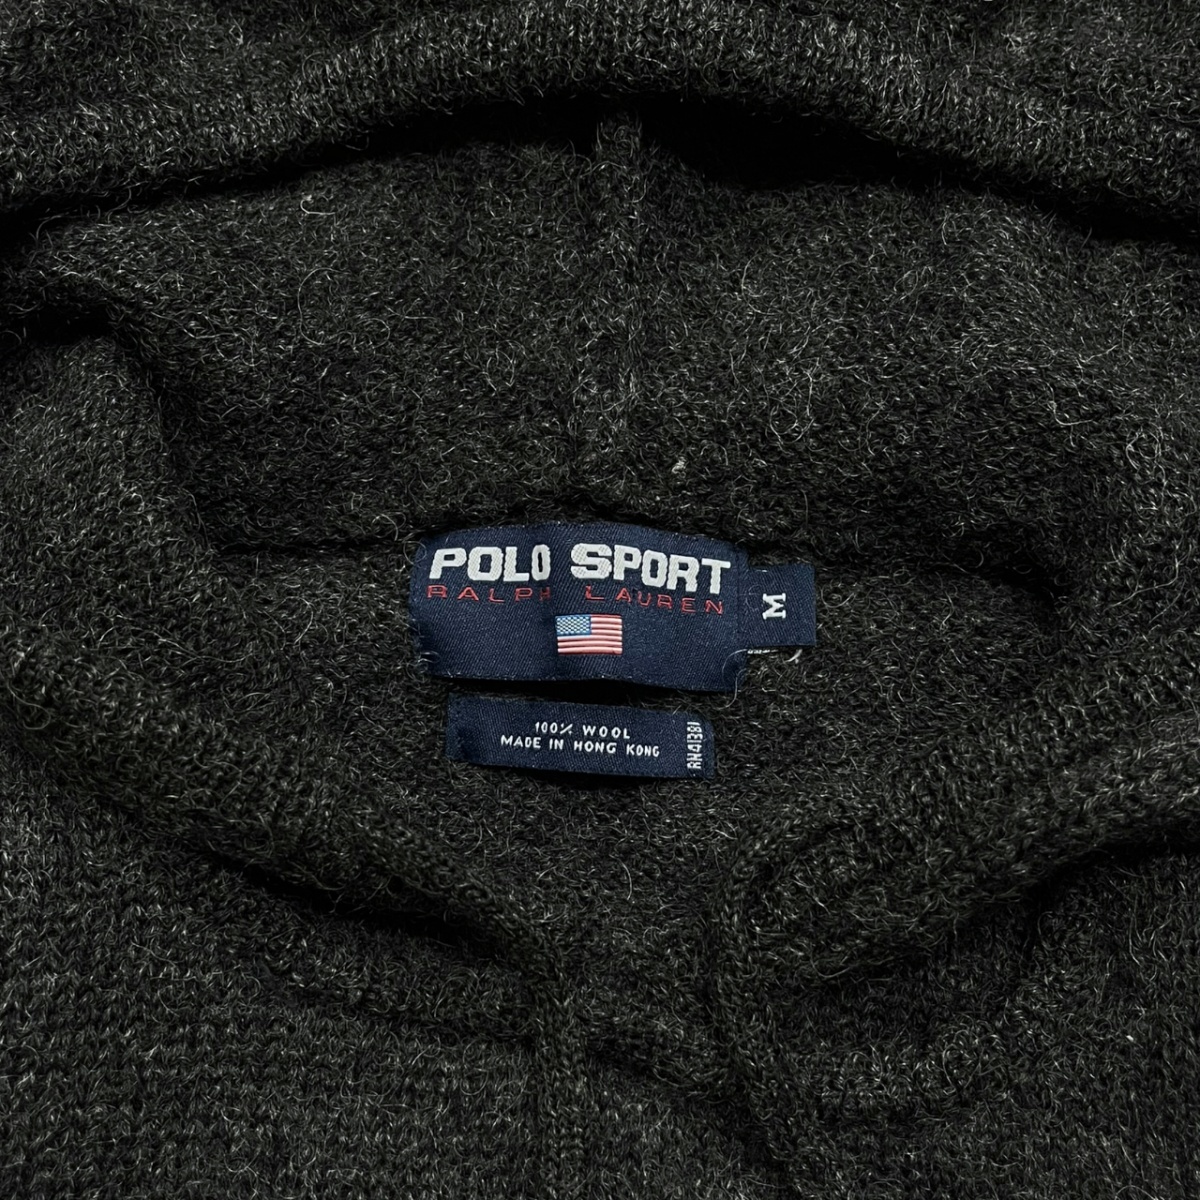 90s POLO SPORT Polo спорт RALPH LAUREN вышивка Logo шерсть вязаный тянуть over Parker f-ti-VINTAGE б/у одежда tops M серый 